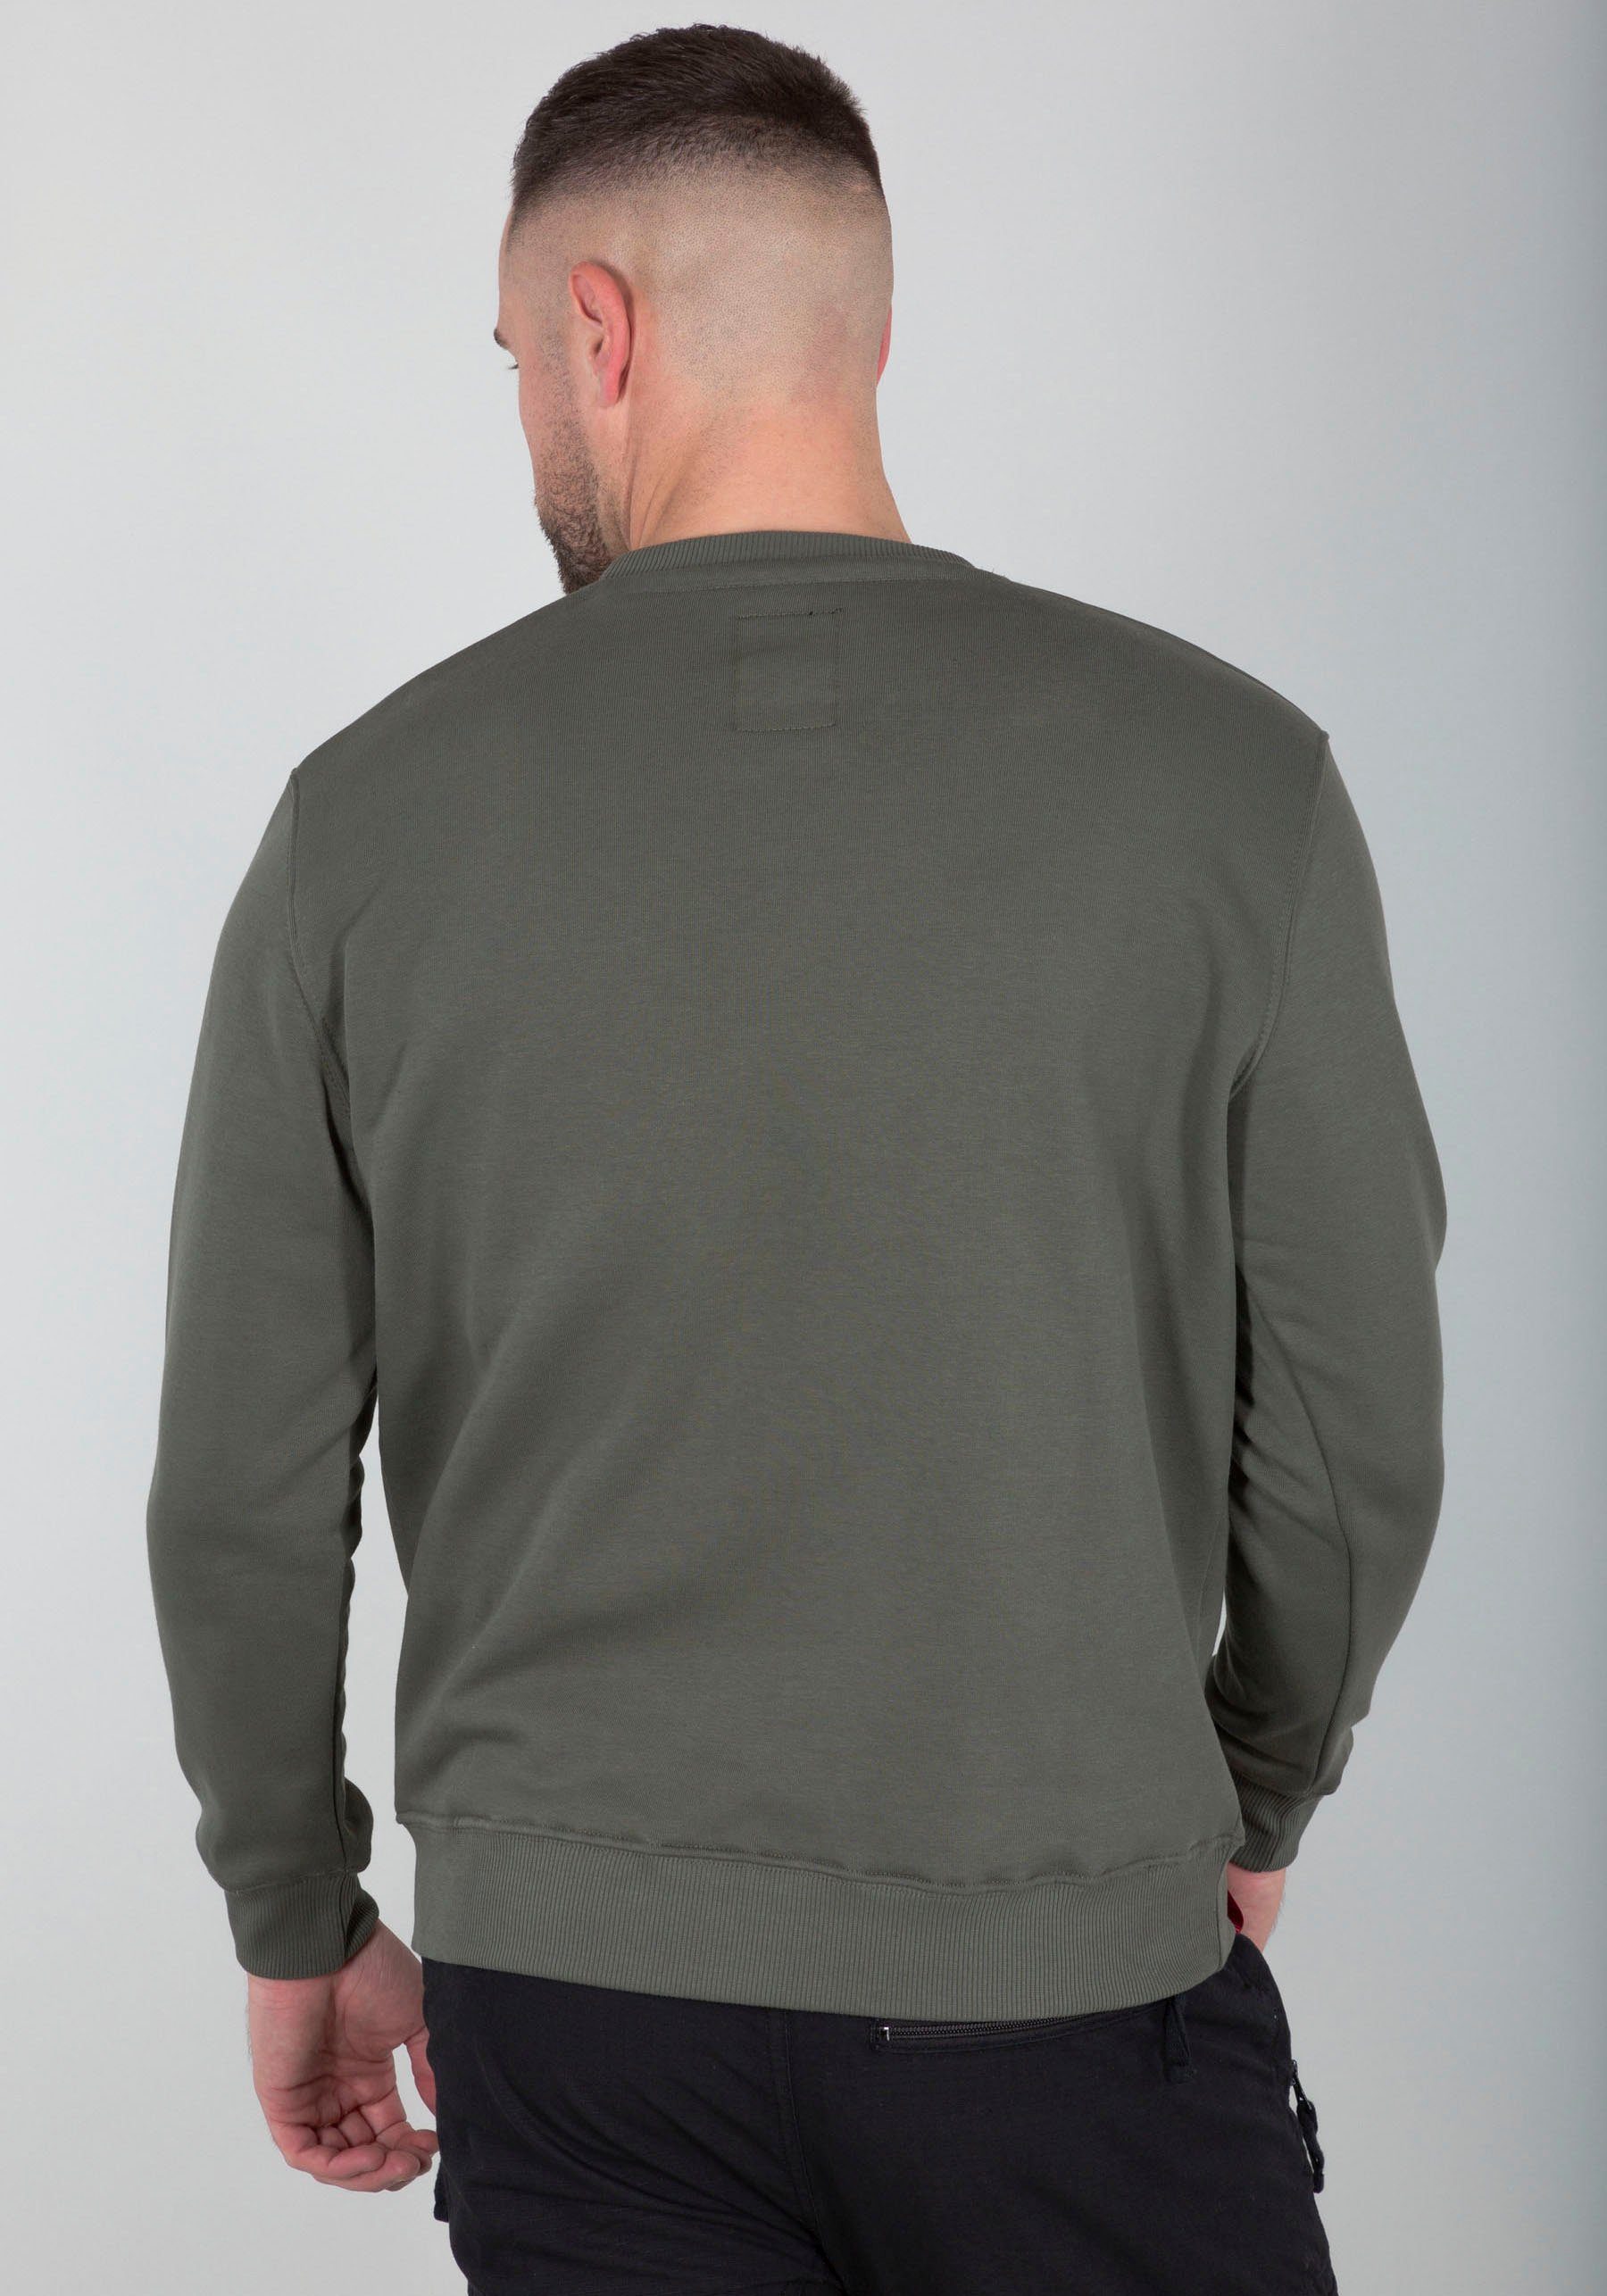 Alpha Industries Sweatshirt olive Basic Sweater dark